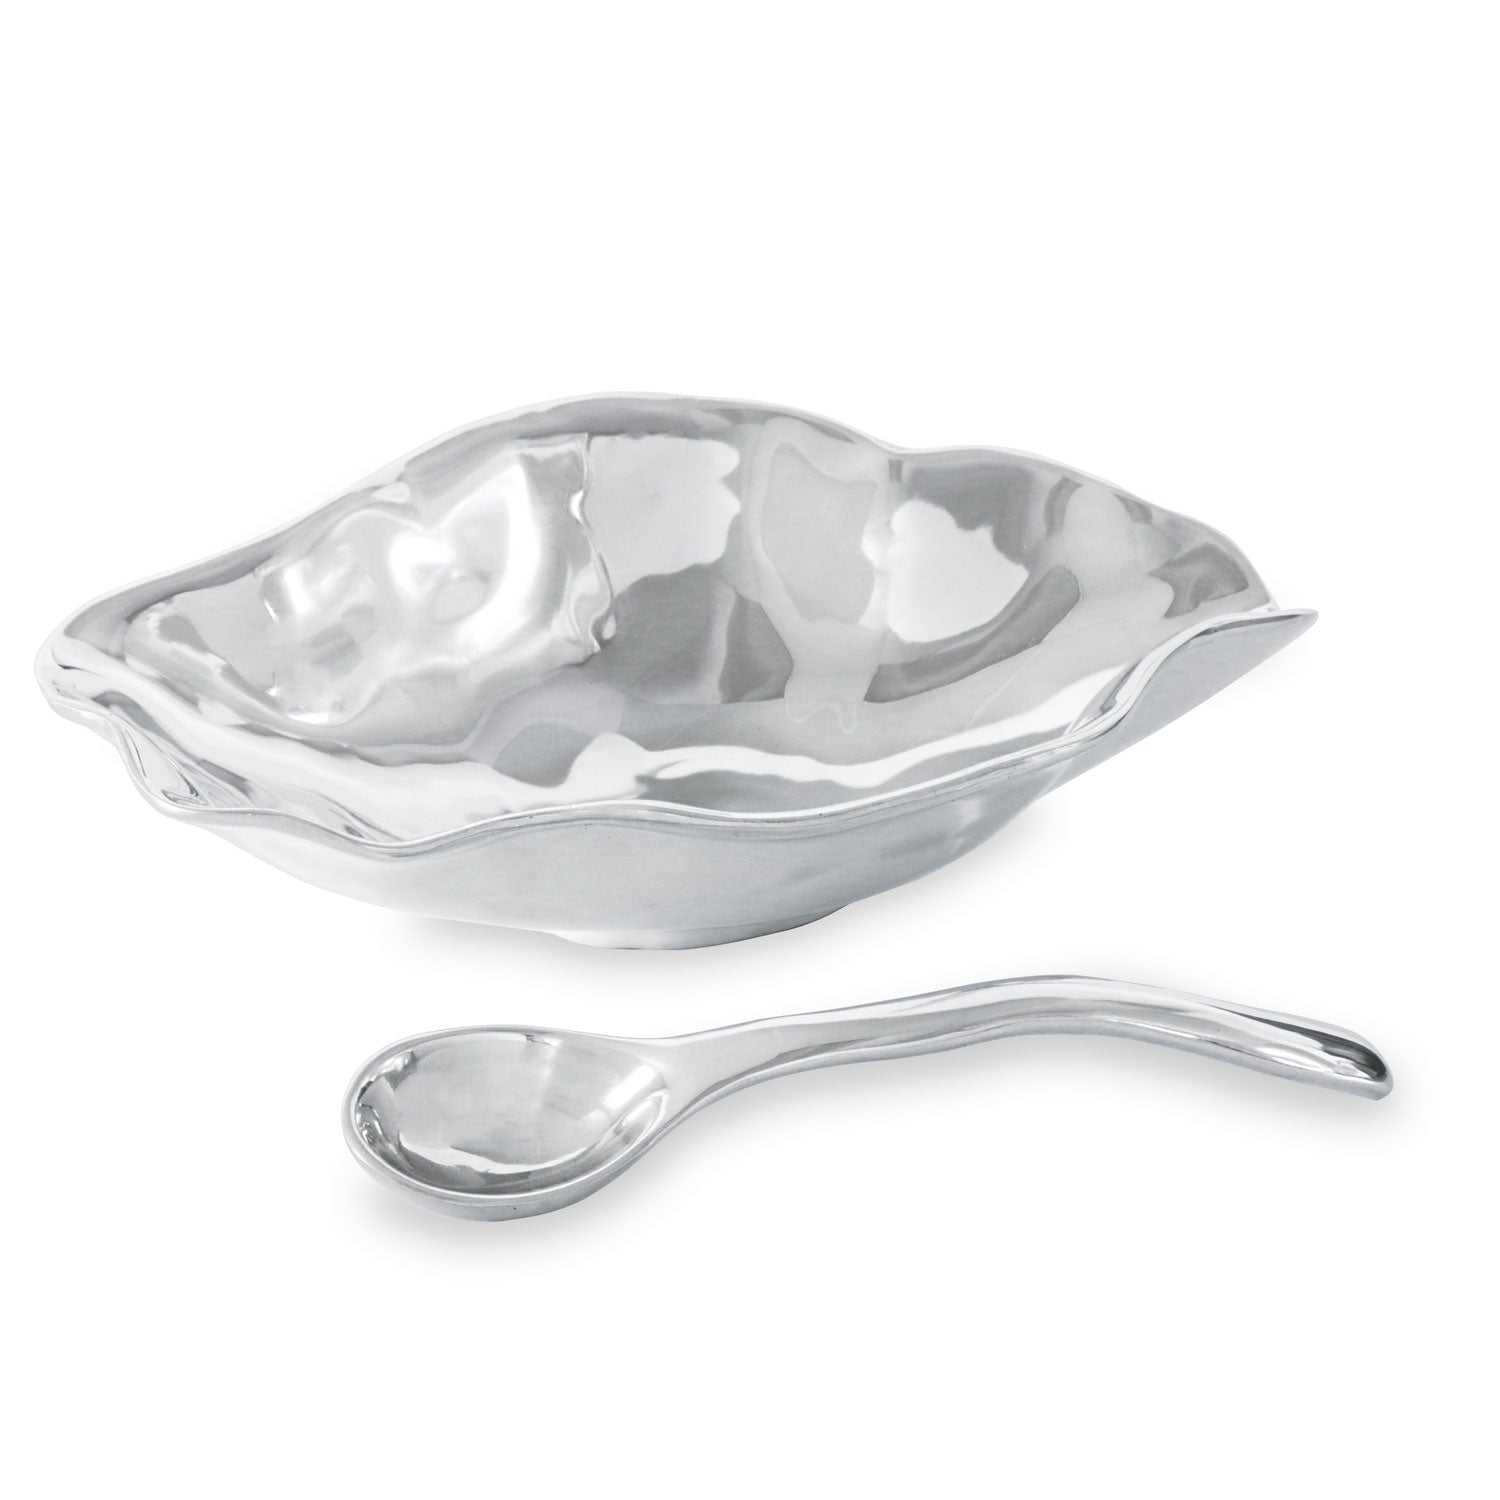 VENTO Claire Medium Bowl with Spoon